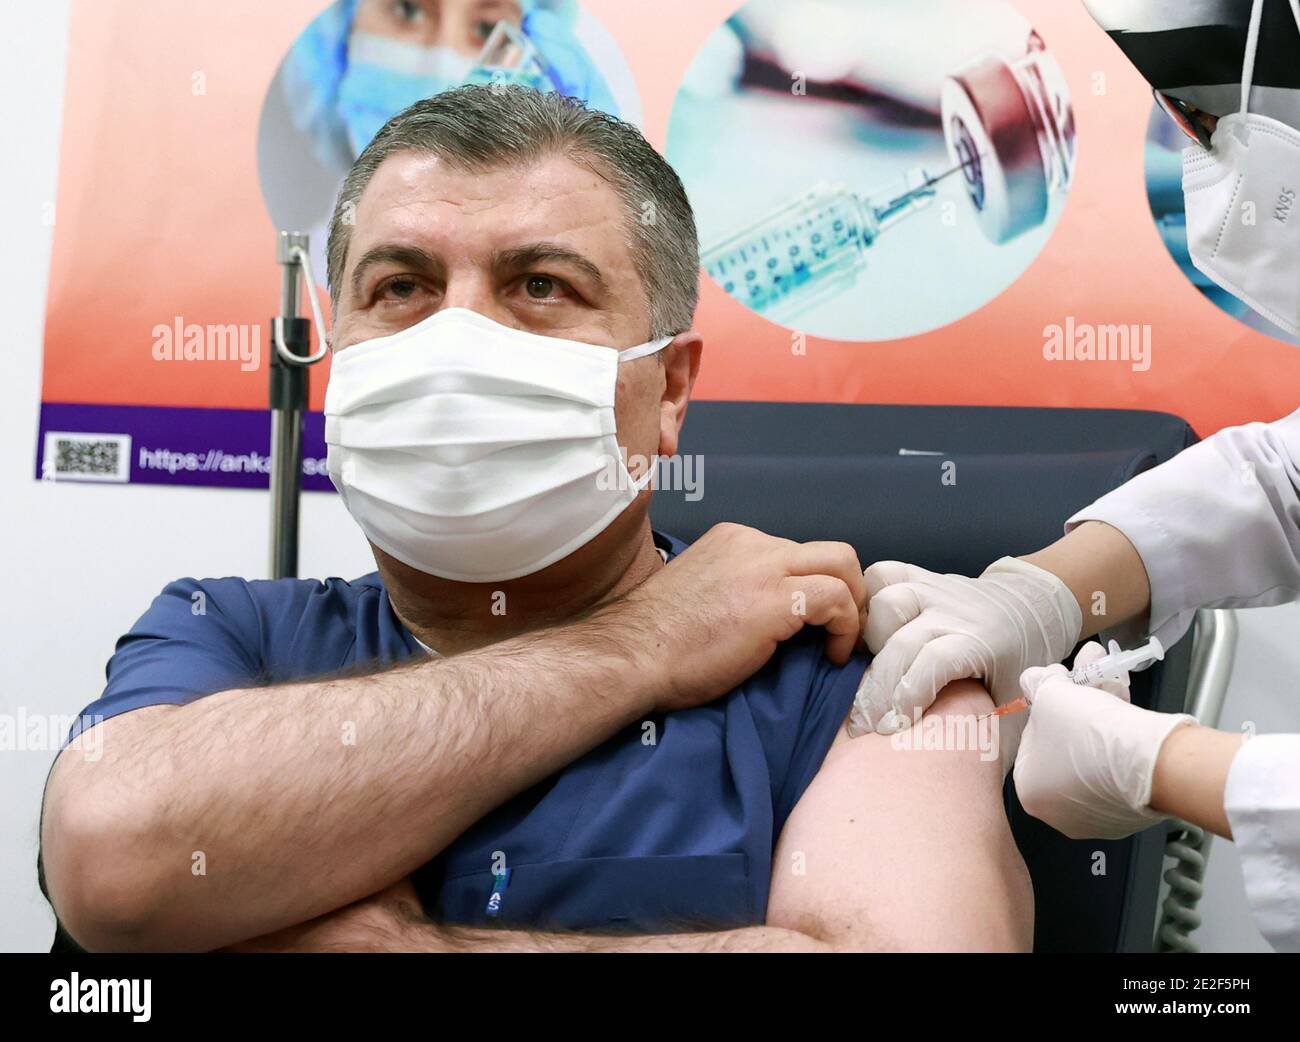 Ankara. 14th Jan, 2021. Turkish Health Minister Fahrettin Koca receives a dose of China's Sinovac COVID-19 vaccine in Ankara, Turkey, Jan. 13, 2021. Credit: Xinhua/Alamy Live News Stock Photo